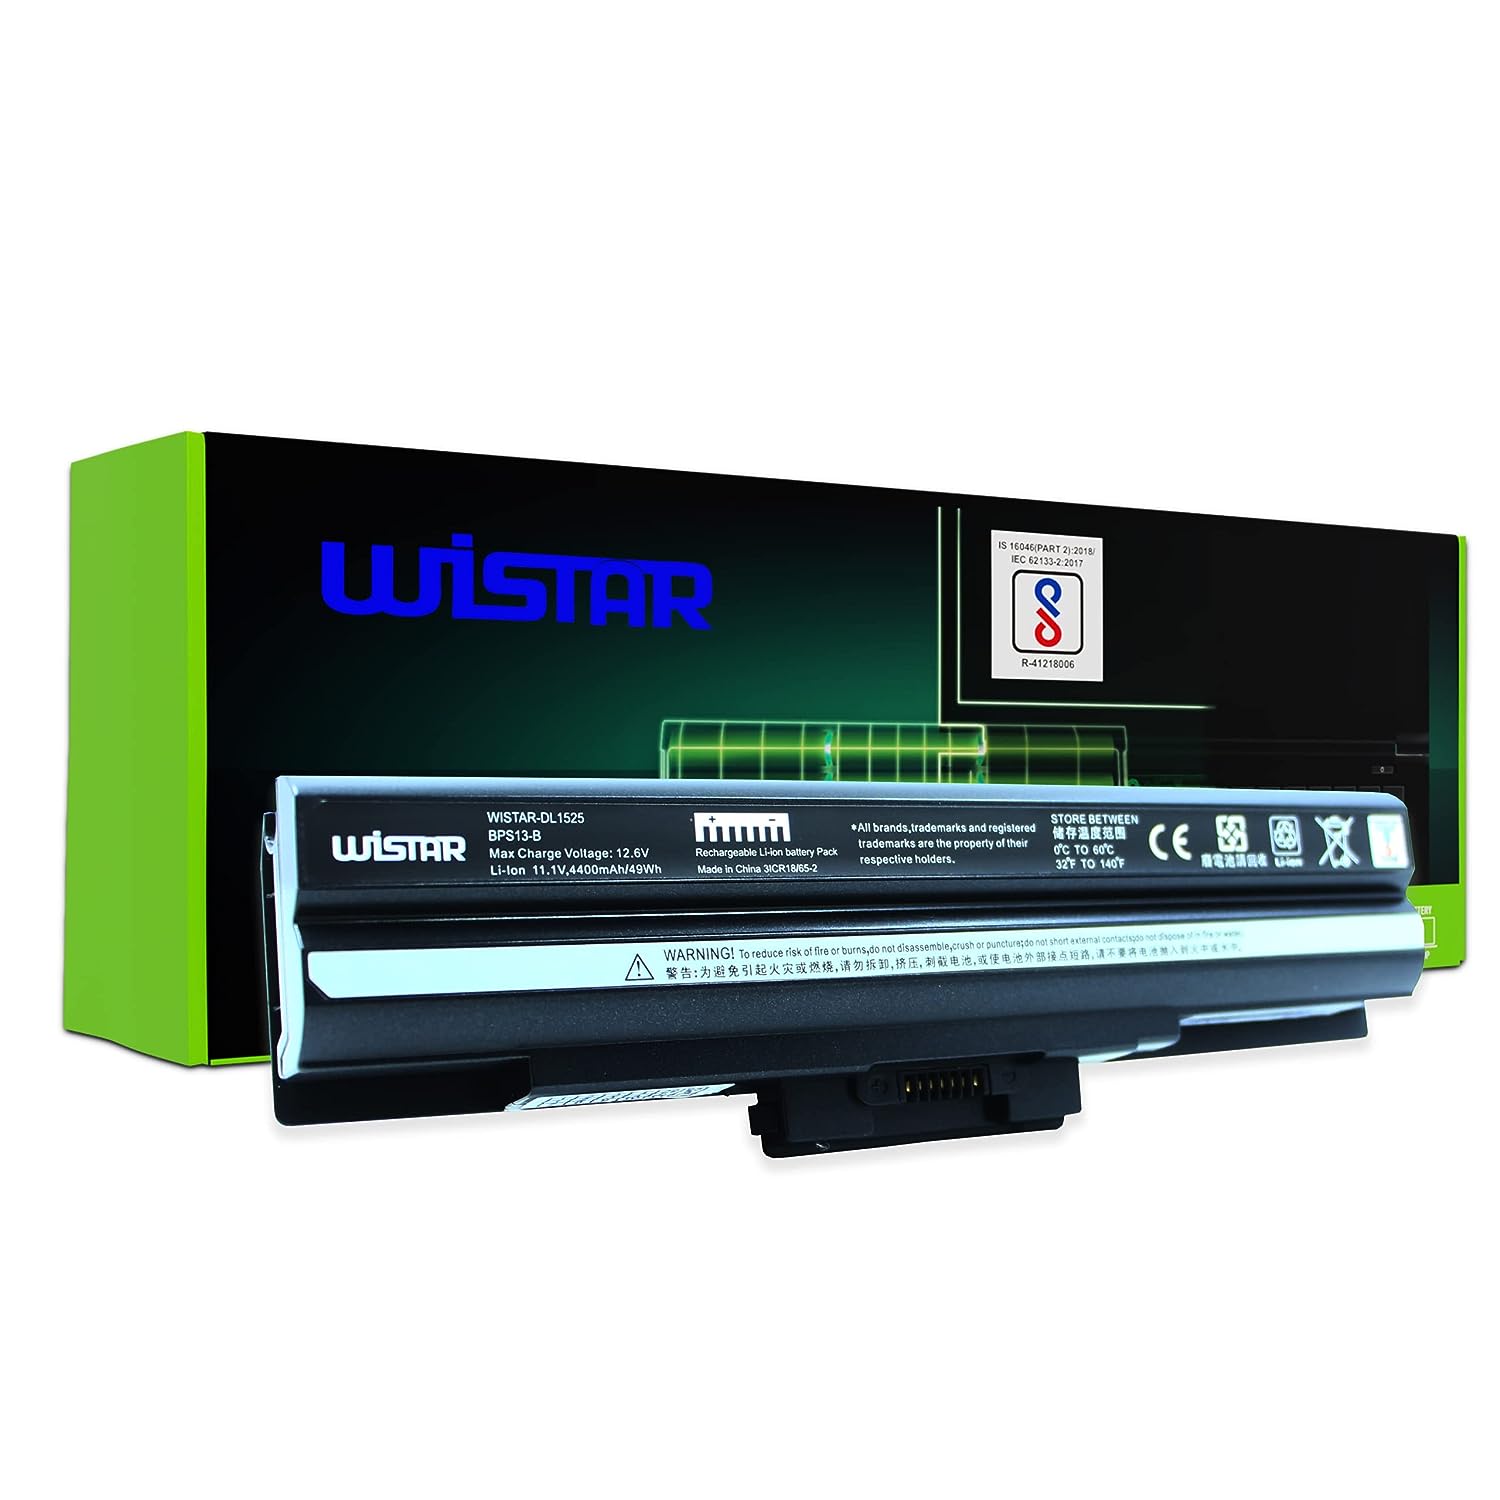 WISTAR VGP-BPS13 VGP-BPS21 Laptop Battery for Sony VAIO VPC-YB15AH/P,VPC-YB15AH/S,VPC-YB16KG/G,VPC-YB16KG/P